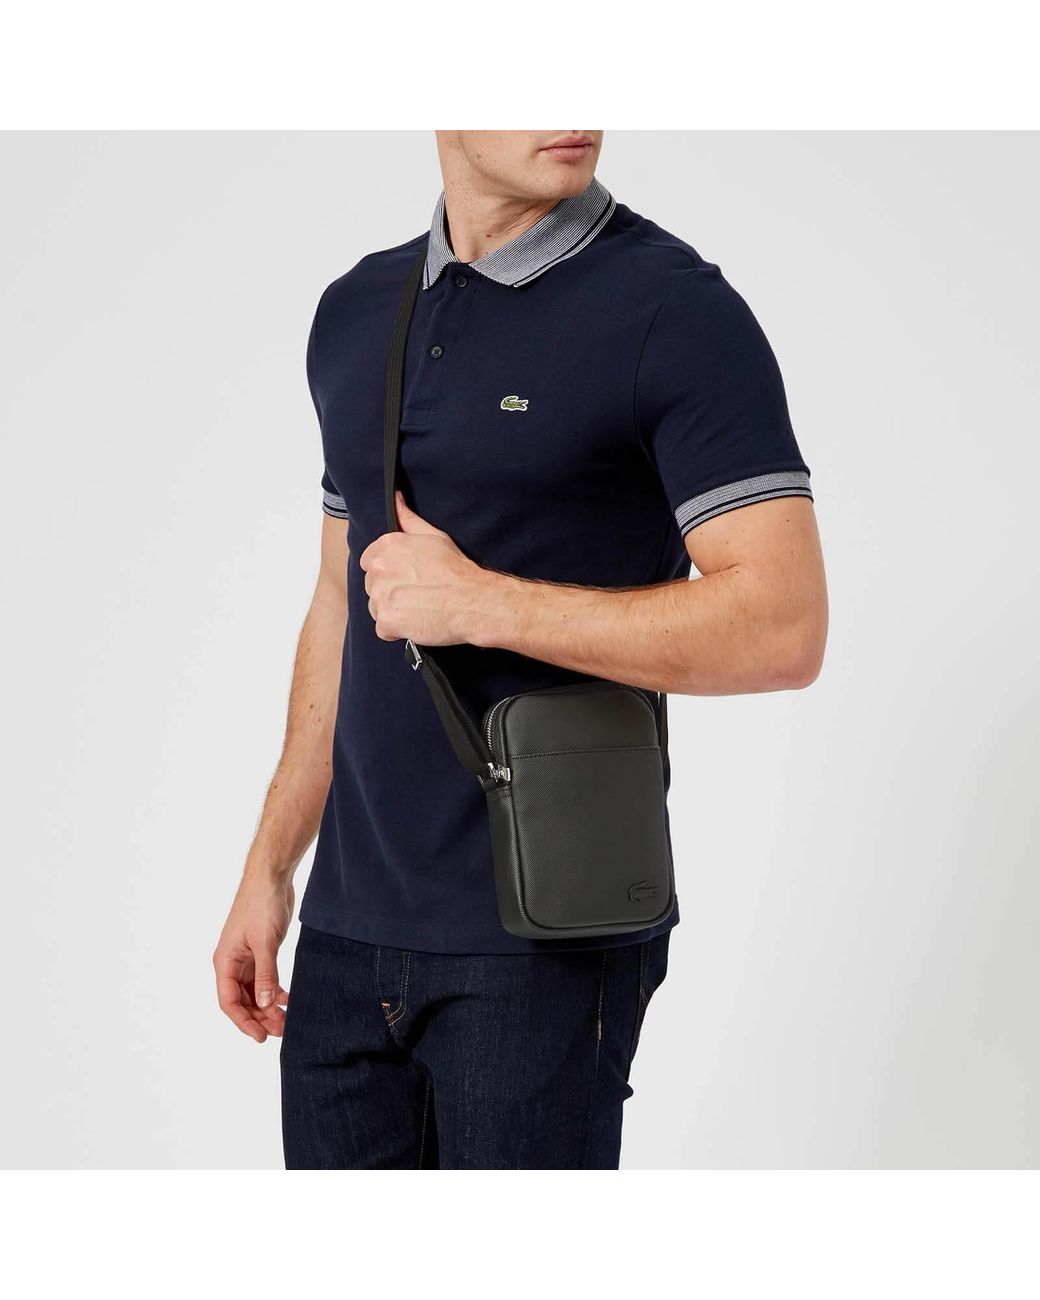 Lacoste Slim Vertical Camera Bag in Black for Men